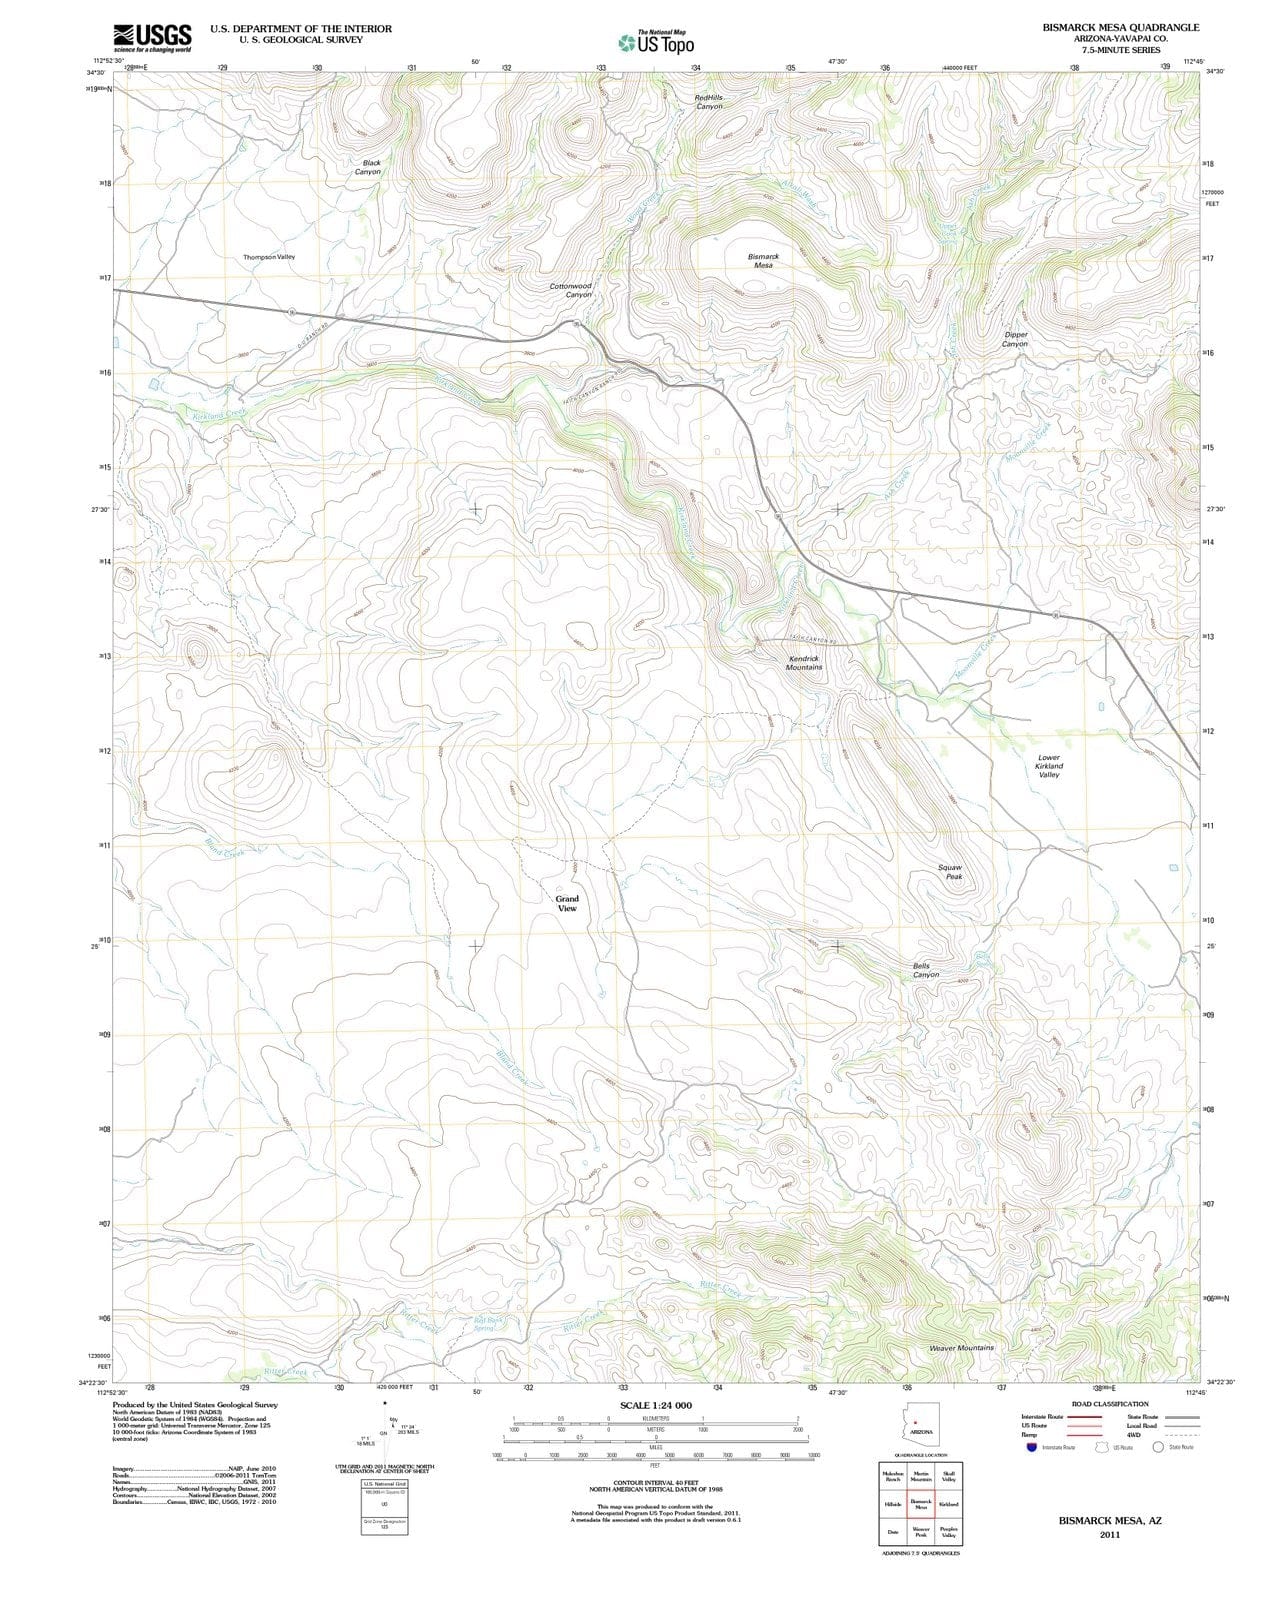 2011 Bismarck Mesa, AZ - Arizona - USGS Topographic Map